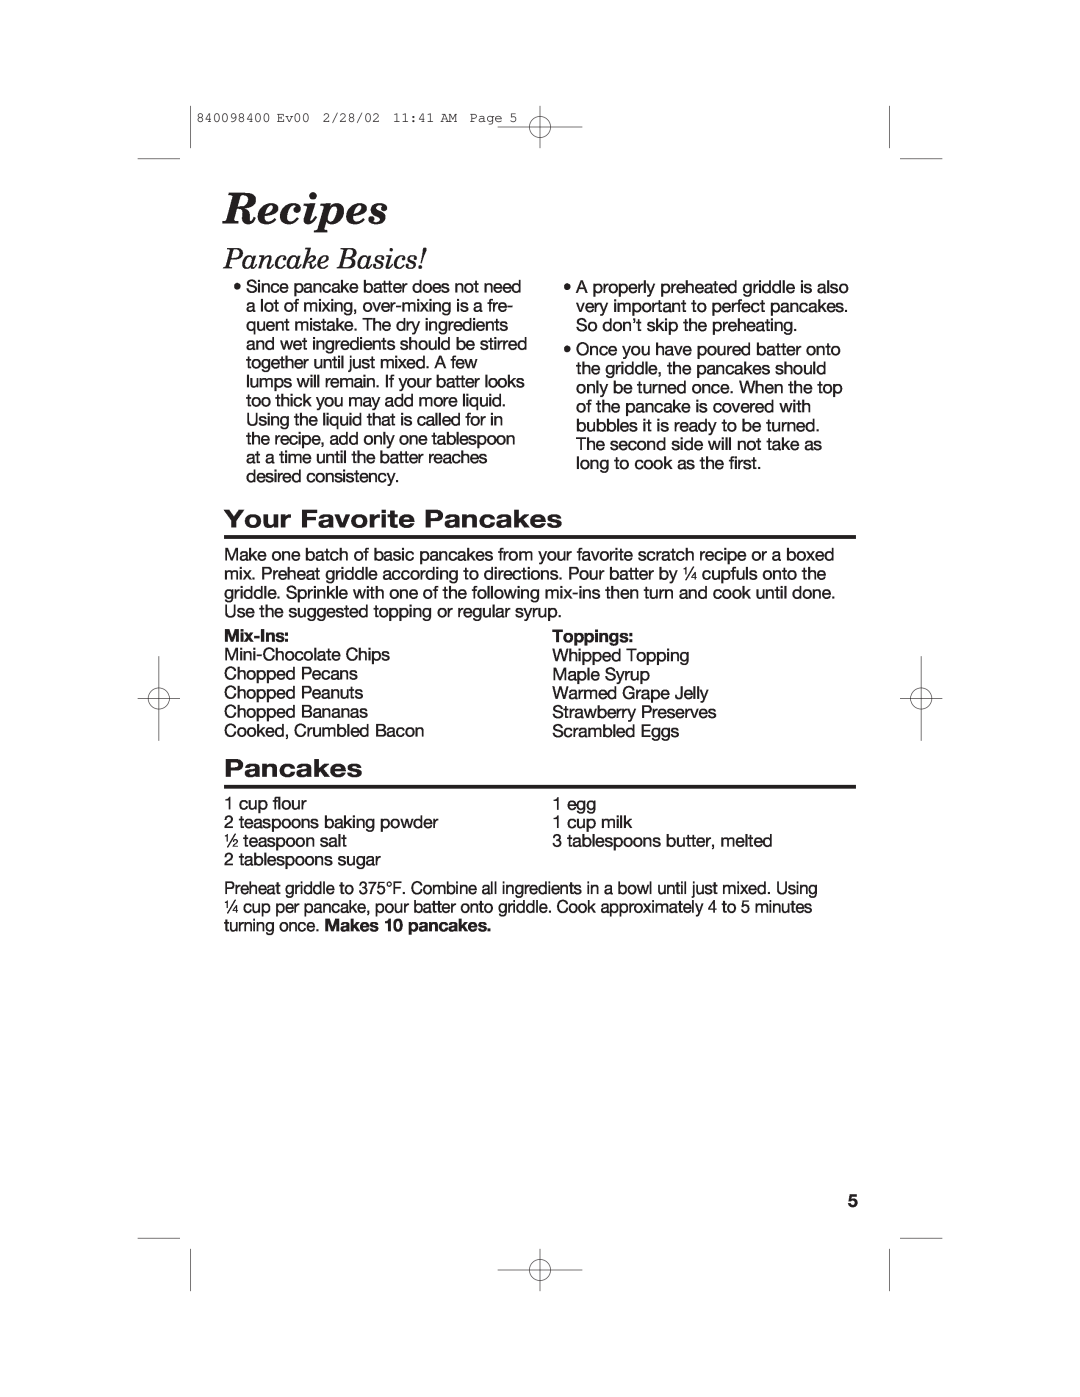 Hamilton Beach Electric Griddle manual Recipes, Pancake Basics, Your Favorite Pancakes, Mix-Ins, Toppings 